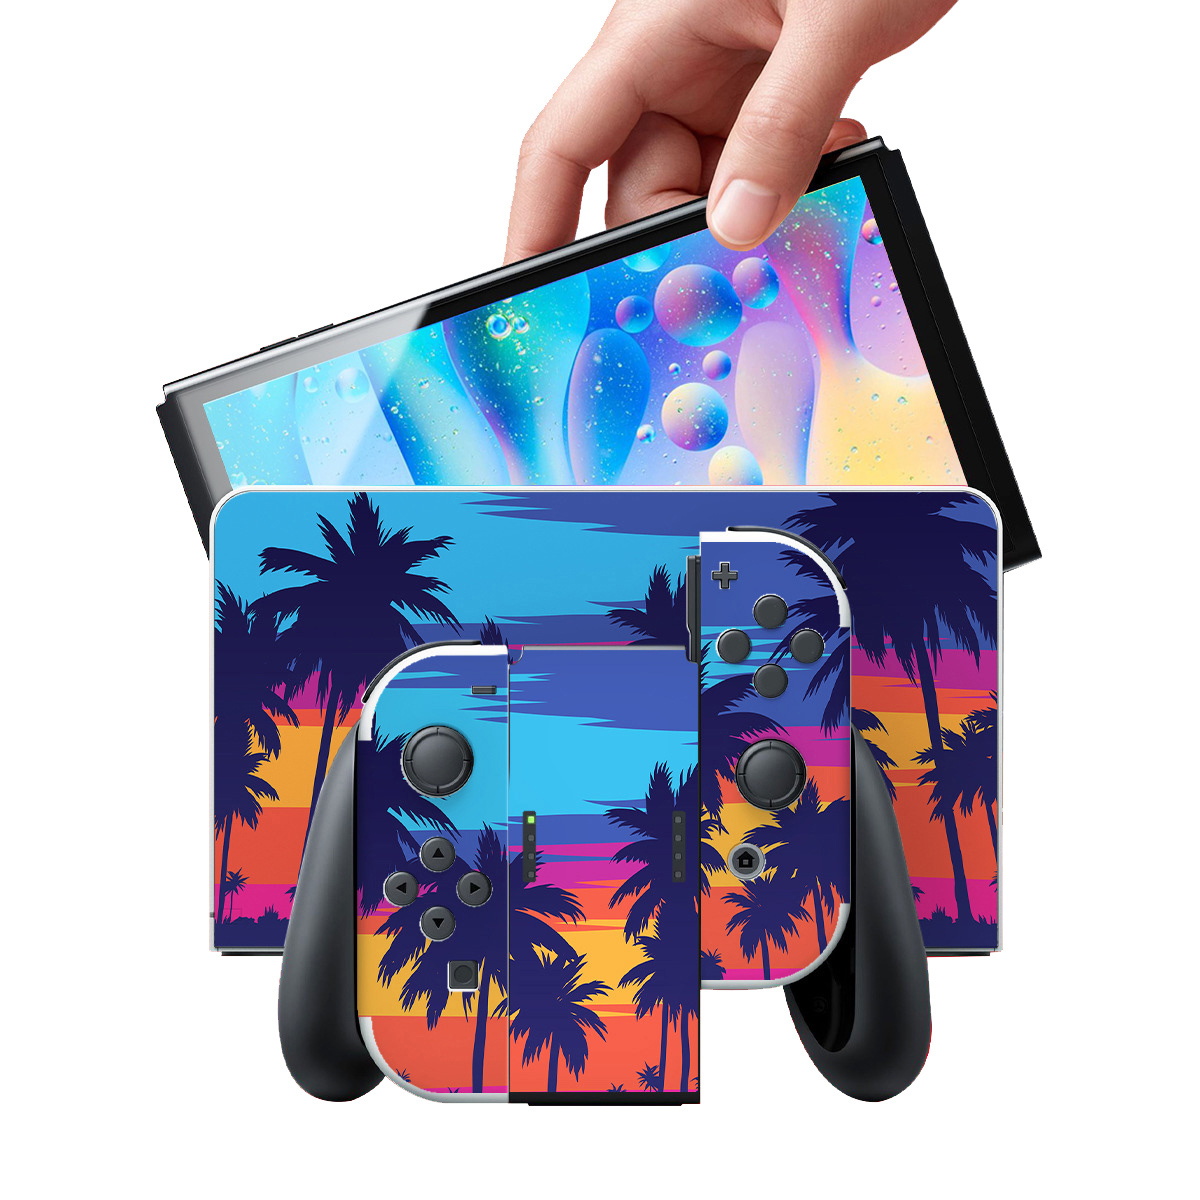 Coconut Groves Premium 3M Skins Set for Nintendo Switch